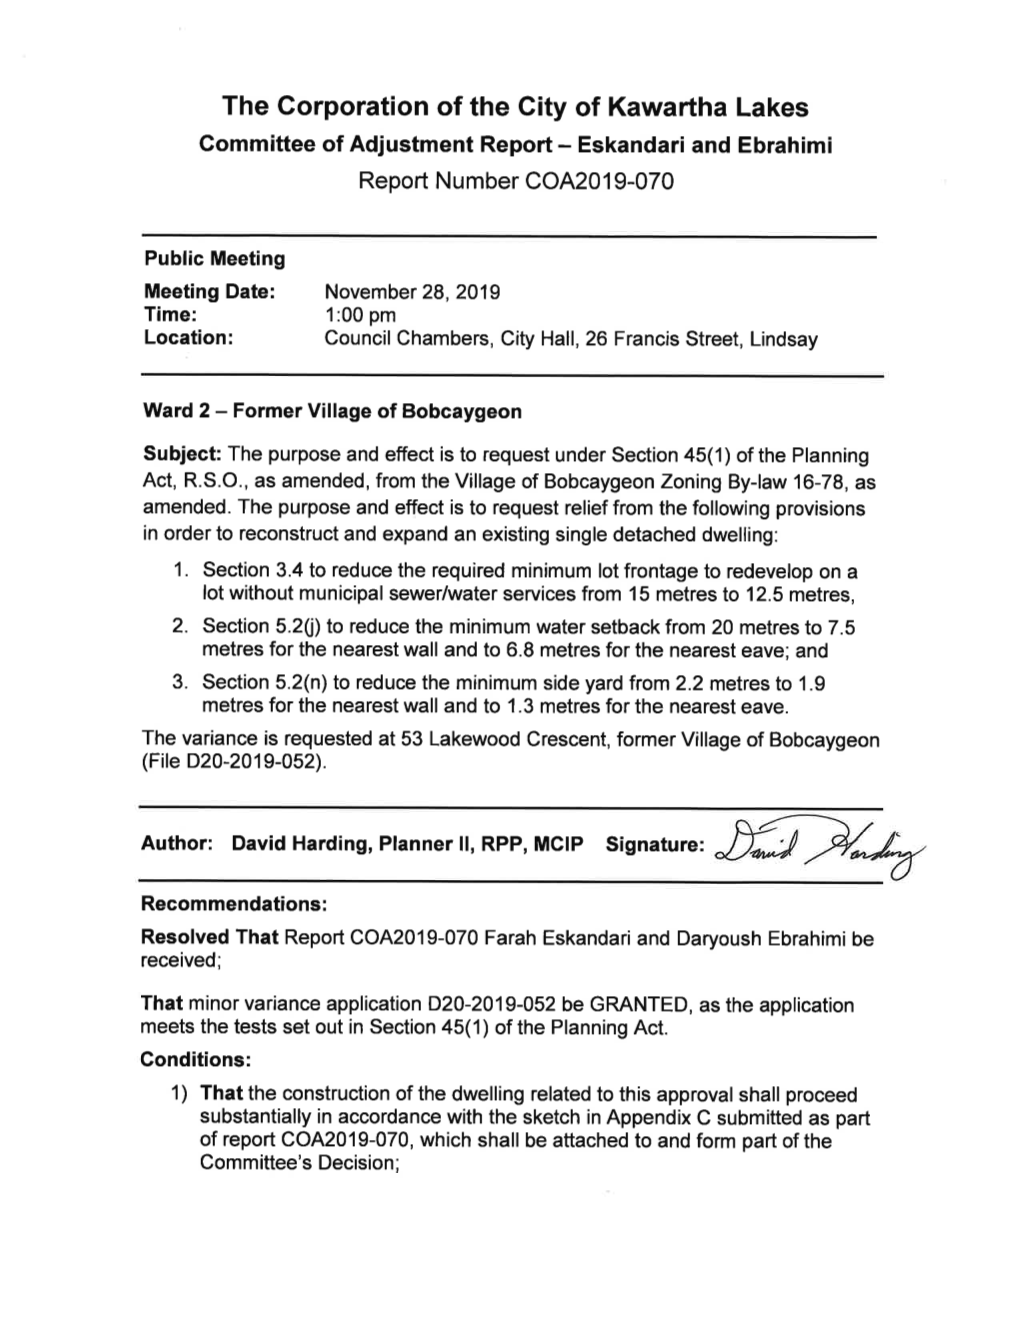 The Corporation of the City of Kawartha Lakes Gommittee of Adjustment Report - Eskandari and Ebrahimi Report Number COA20 1 9-070